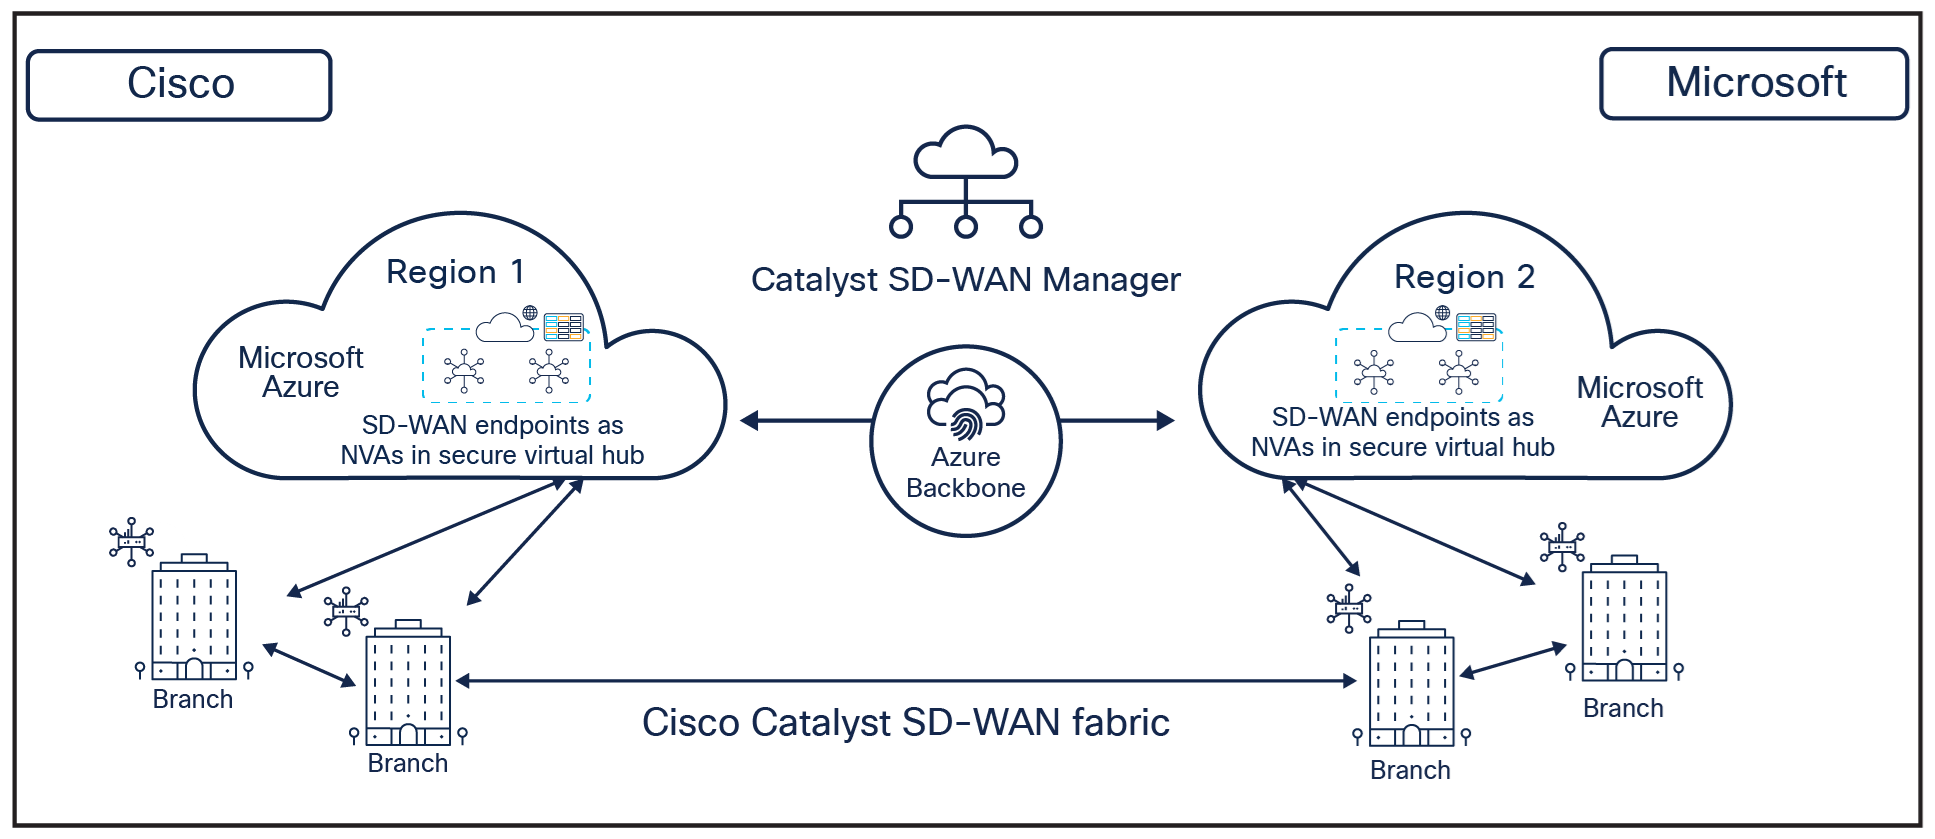 Cisco Catalyst SD-WAN with Microsoft Azure Virtual WAN integration